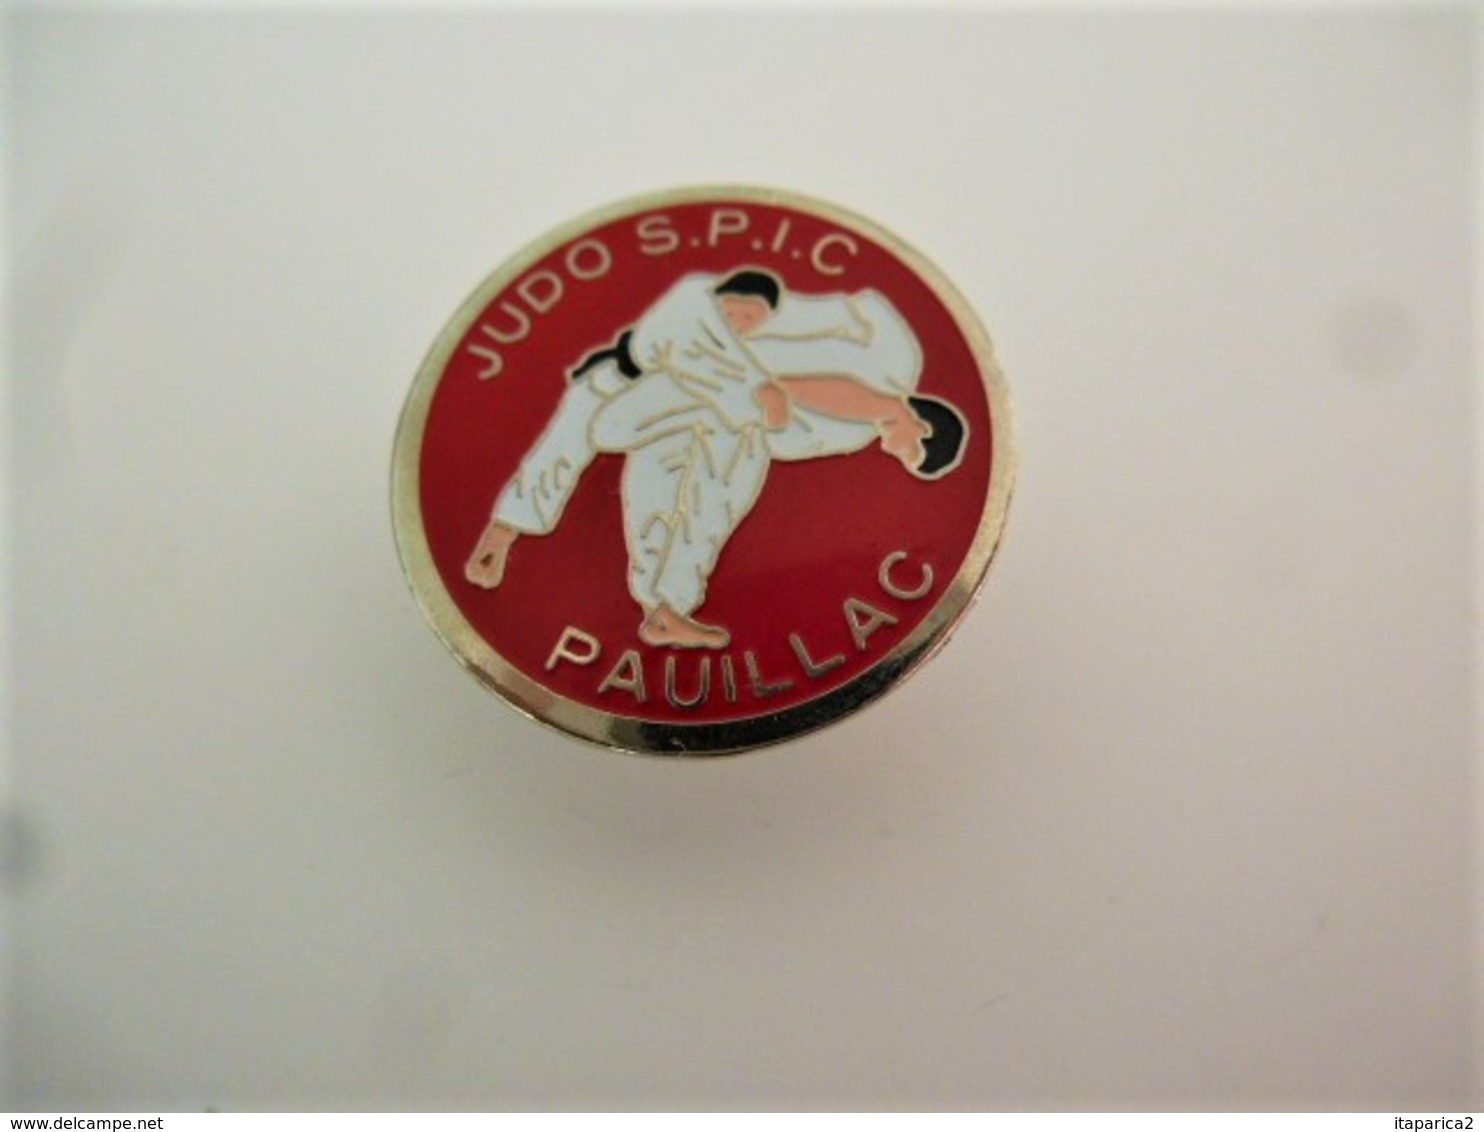 PINS JUDO S.P.I.C. PAUILLAC 33 GIRONDE / 33NAT - Judo